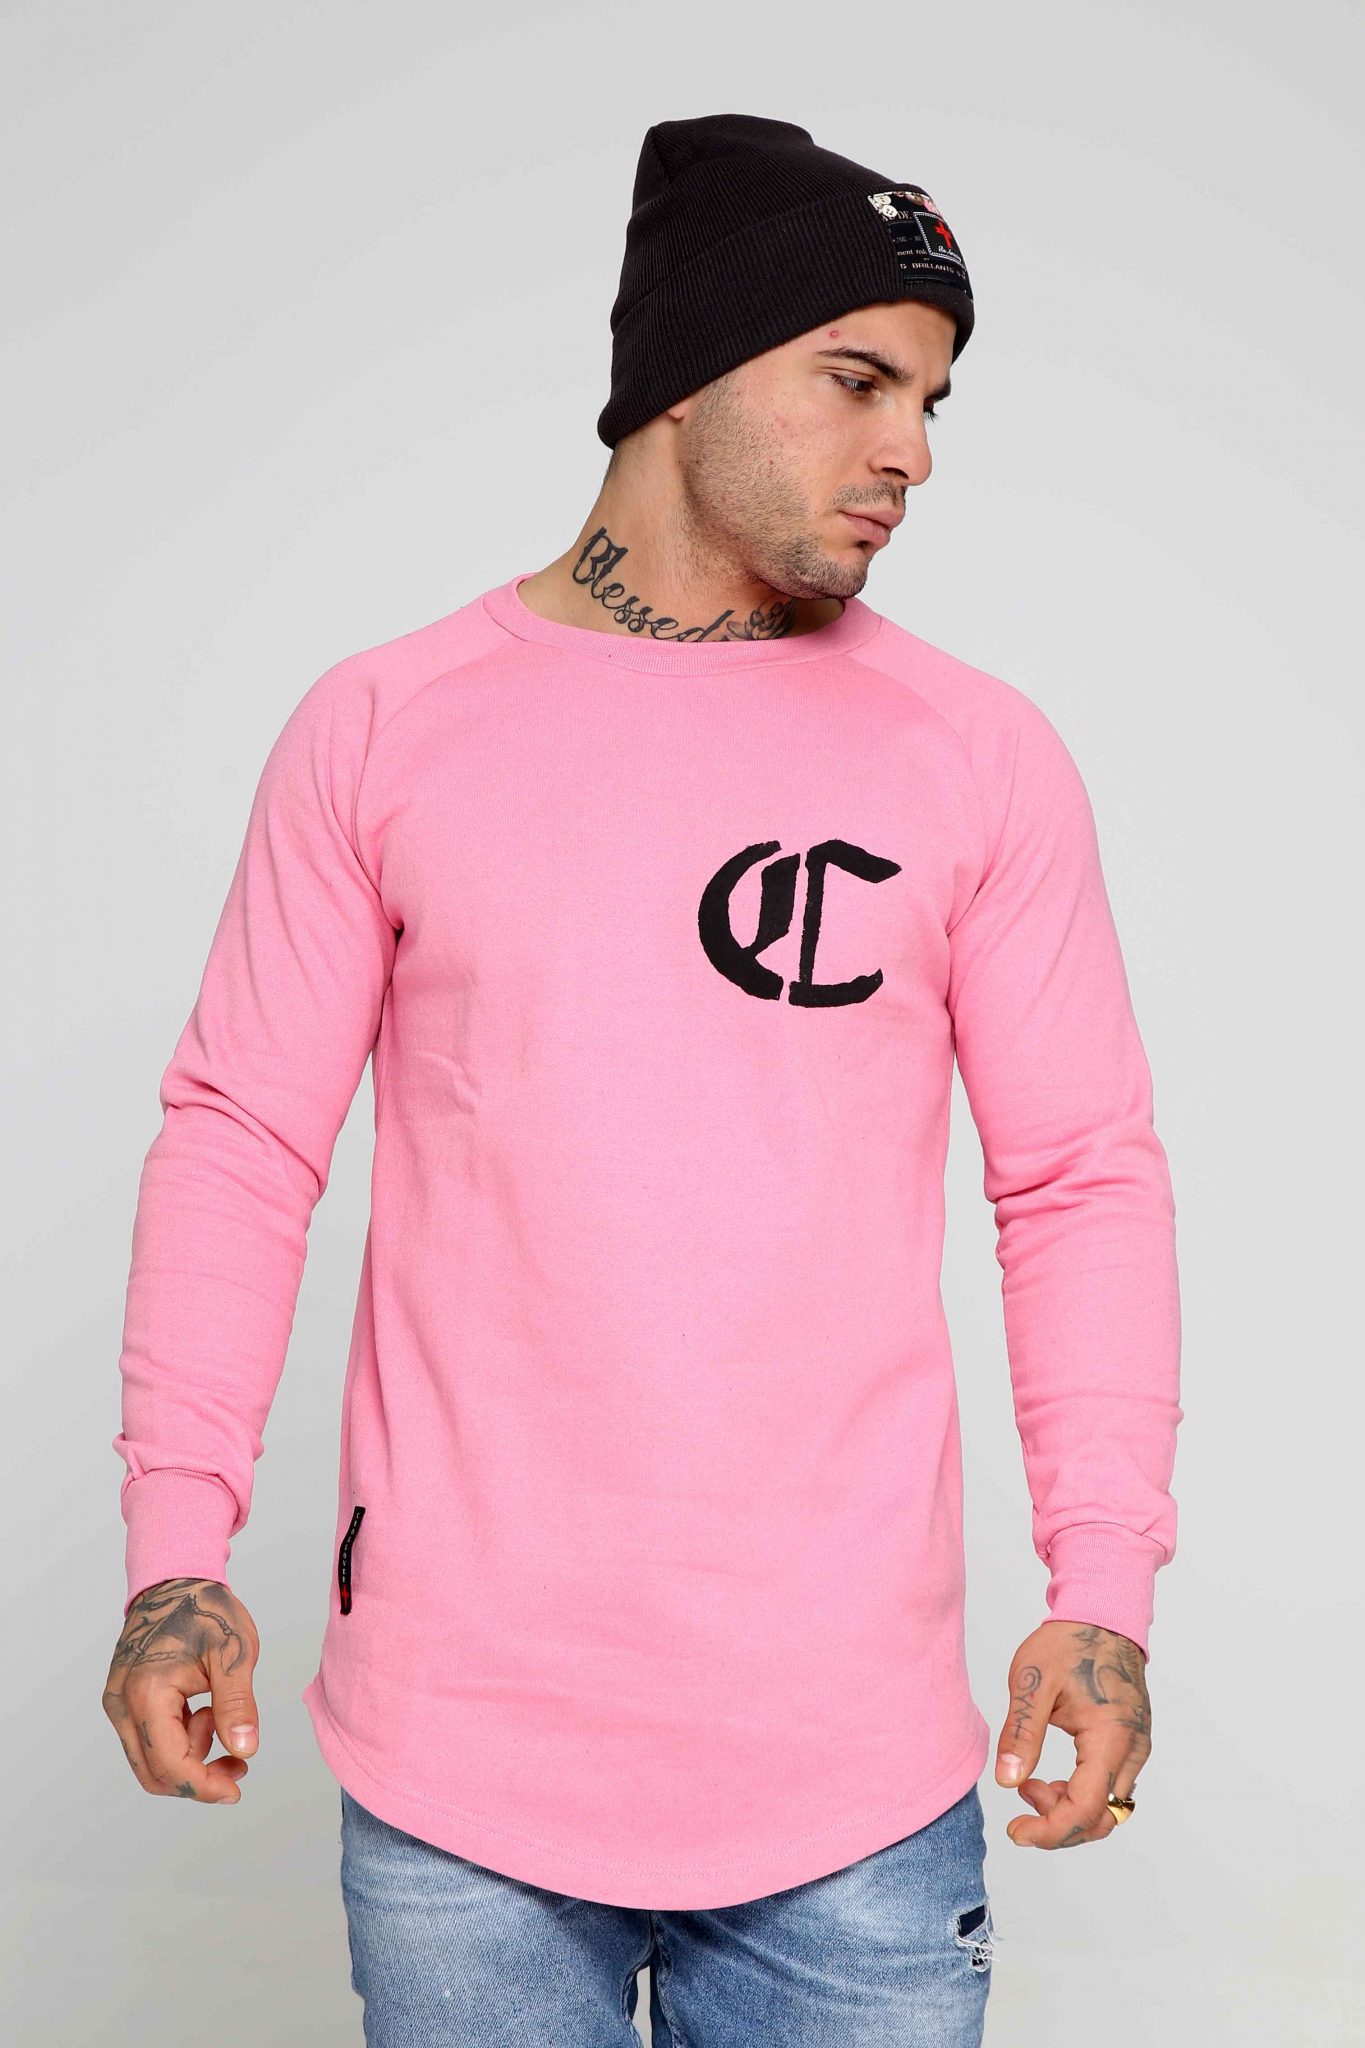 Saga Long-sleeve Shirt Pink